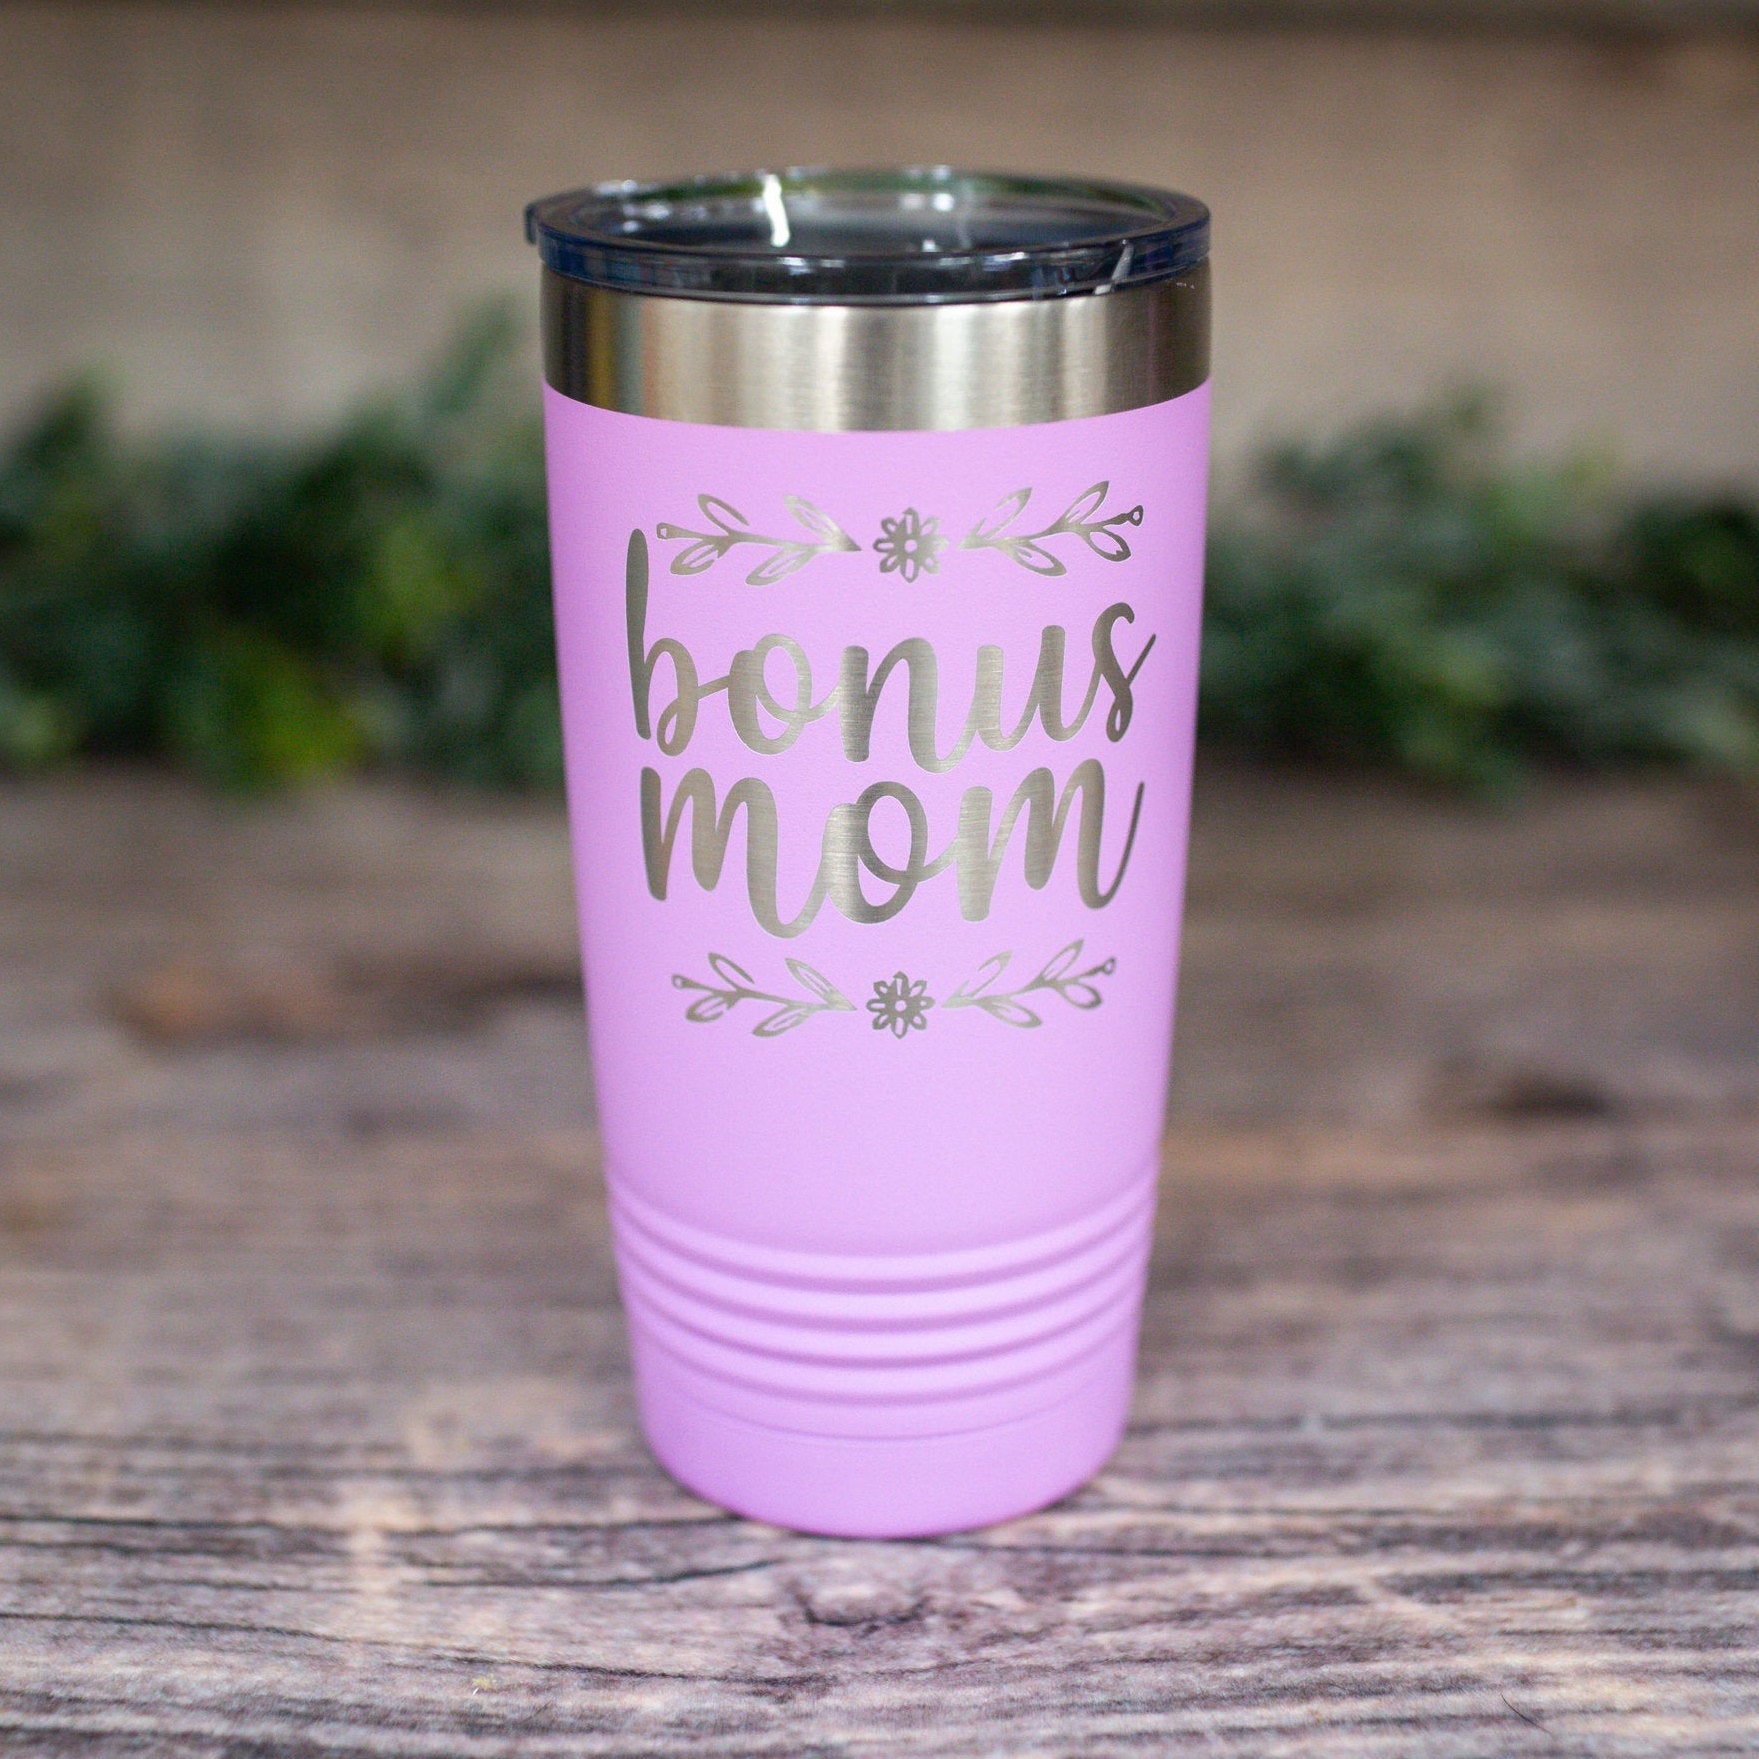 Best Bonus Mom Ever Coffee Mug Mother's Day Gift Idea 15oz / White